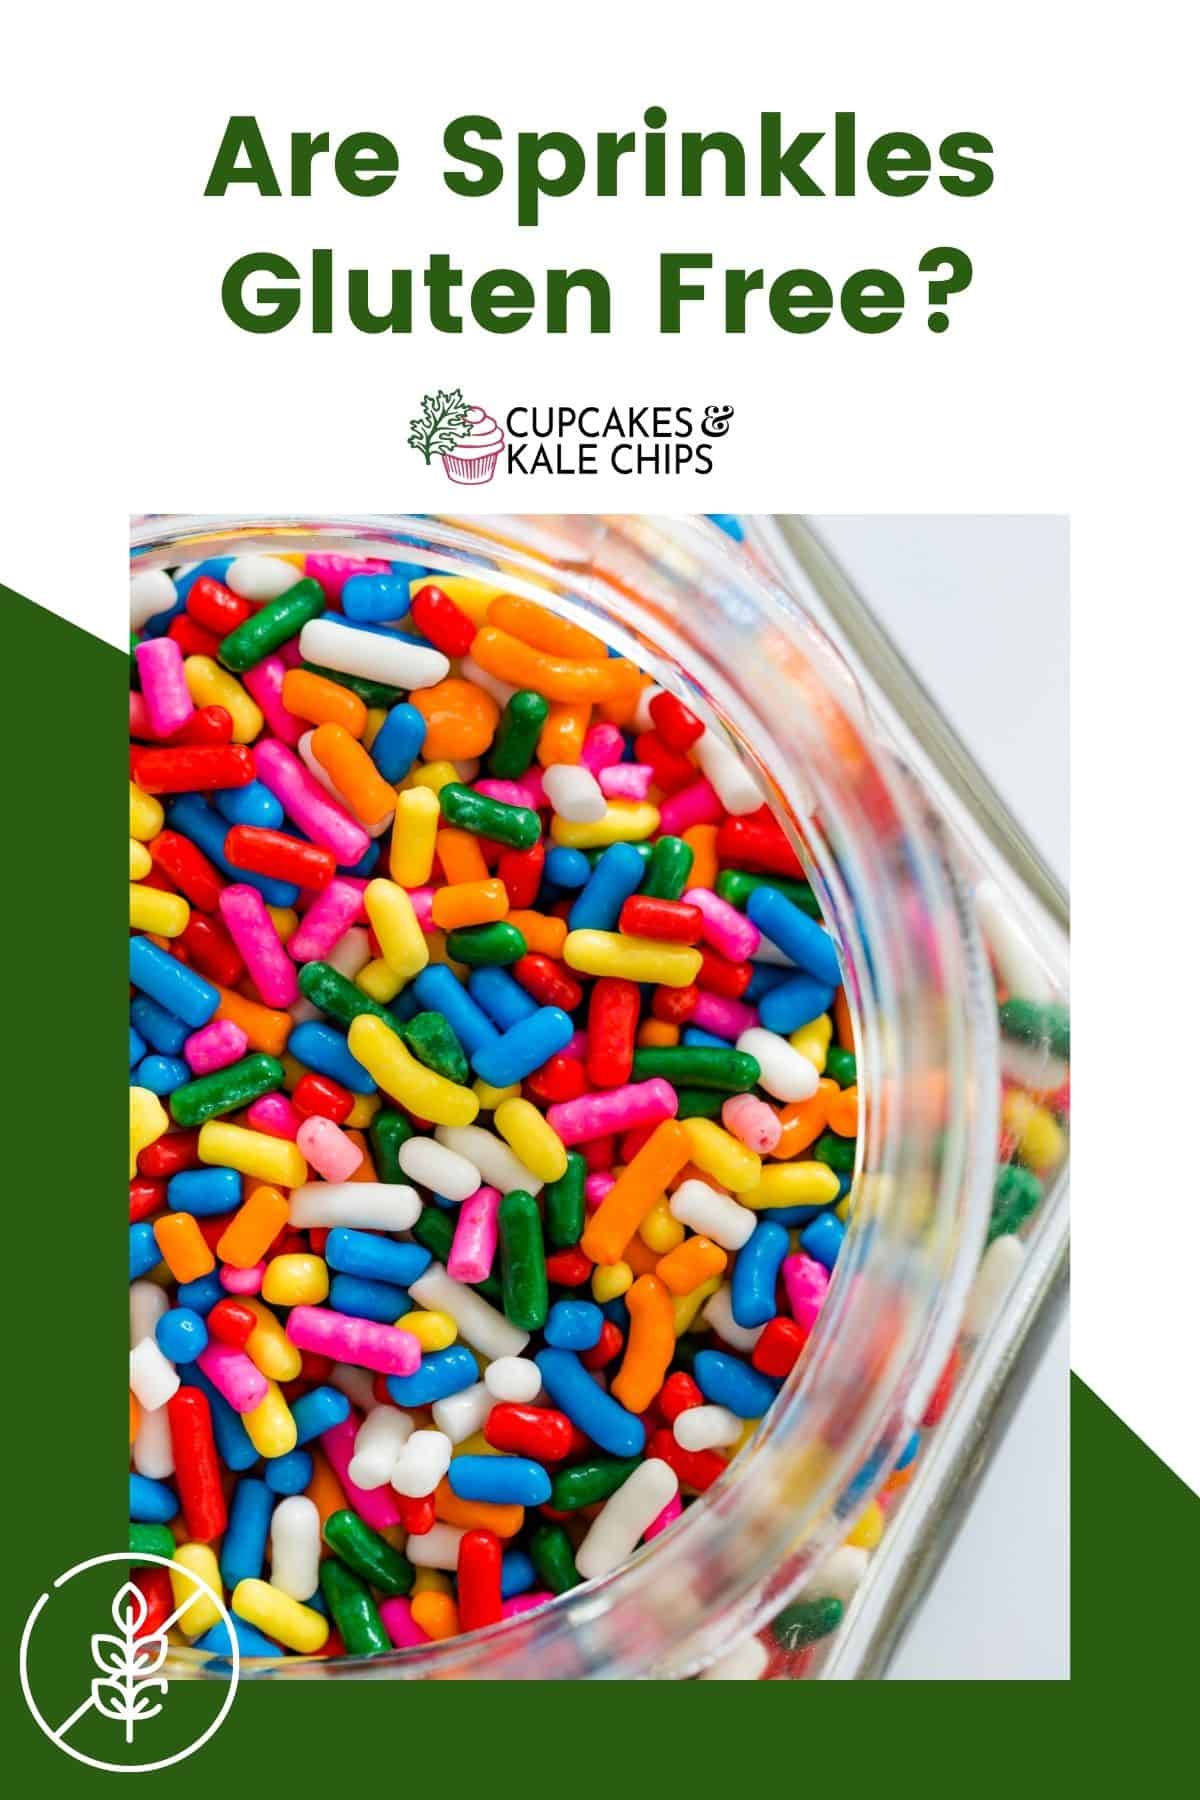 Are Sprinkles Gluten Free?